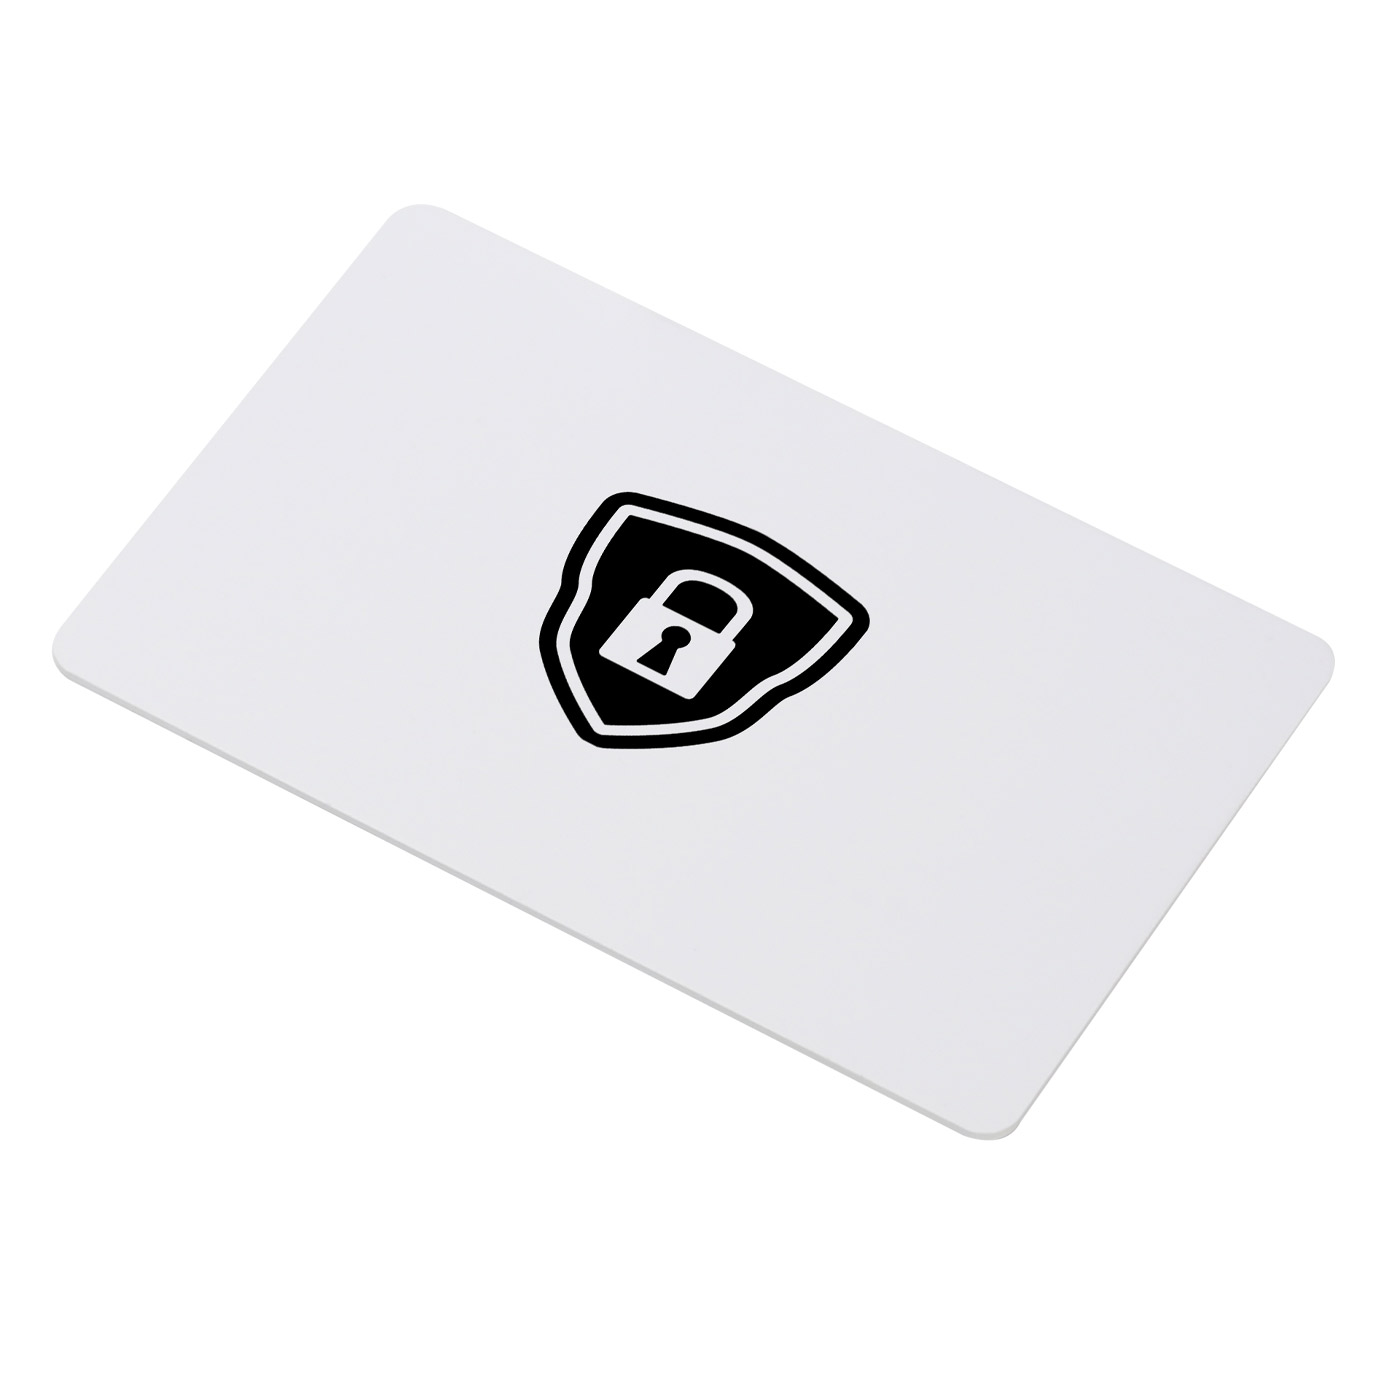 RFID Blocker Card, Schuelbe Promotion Service GmbH